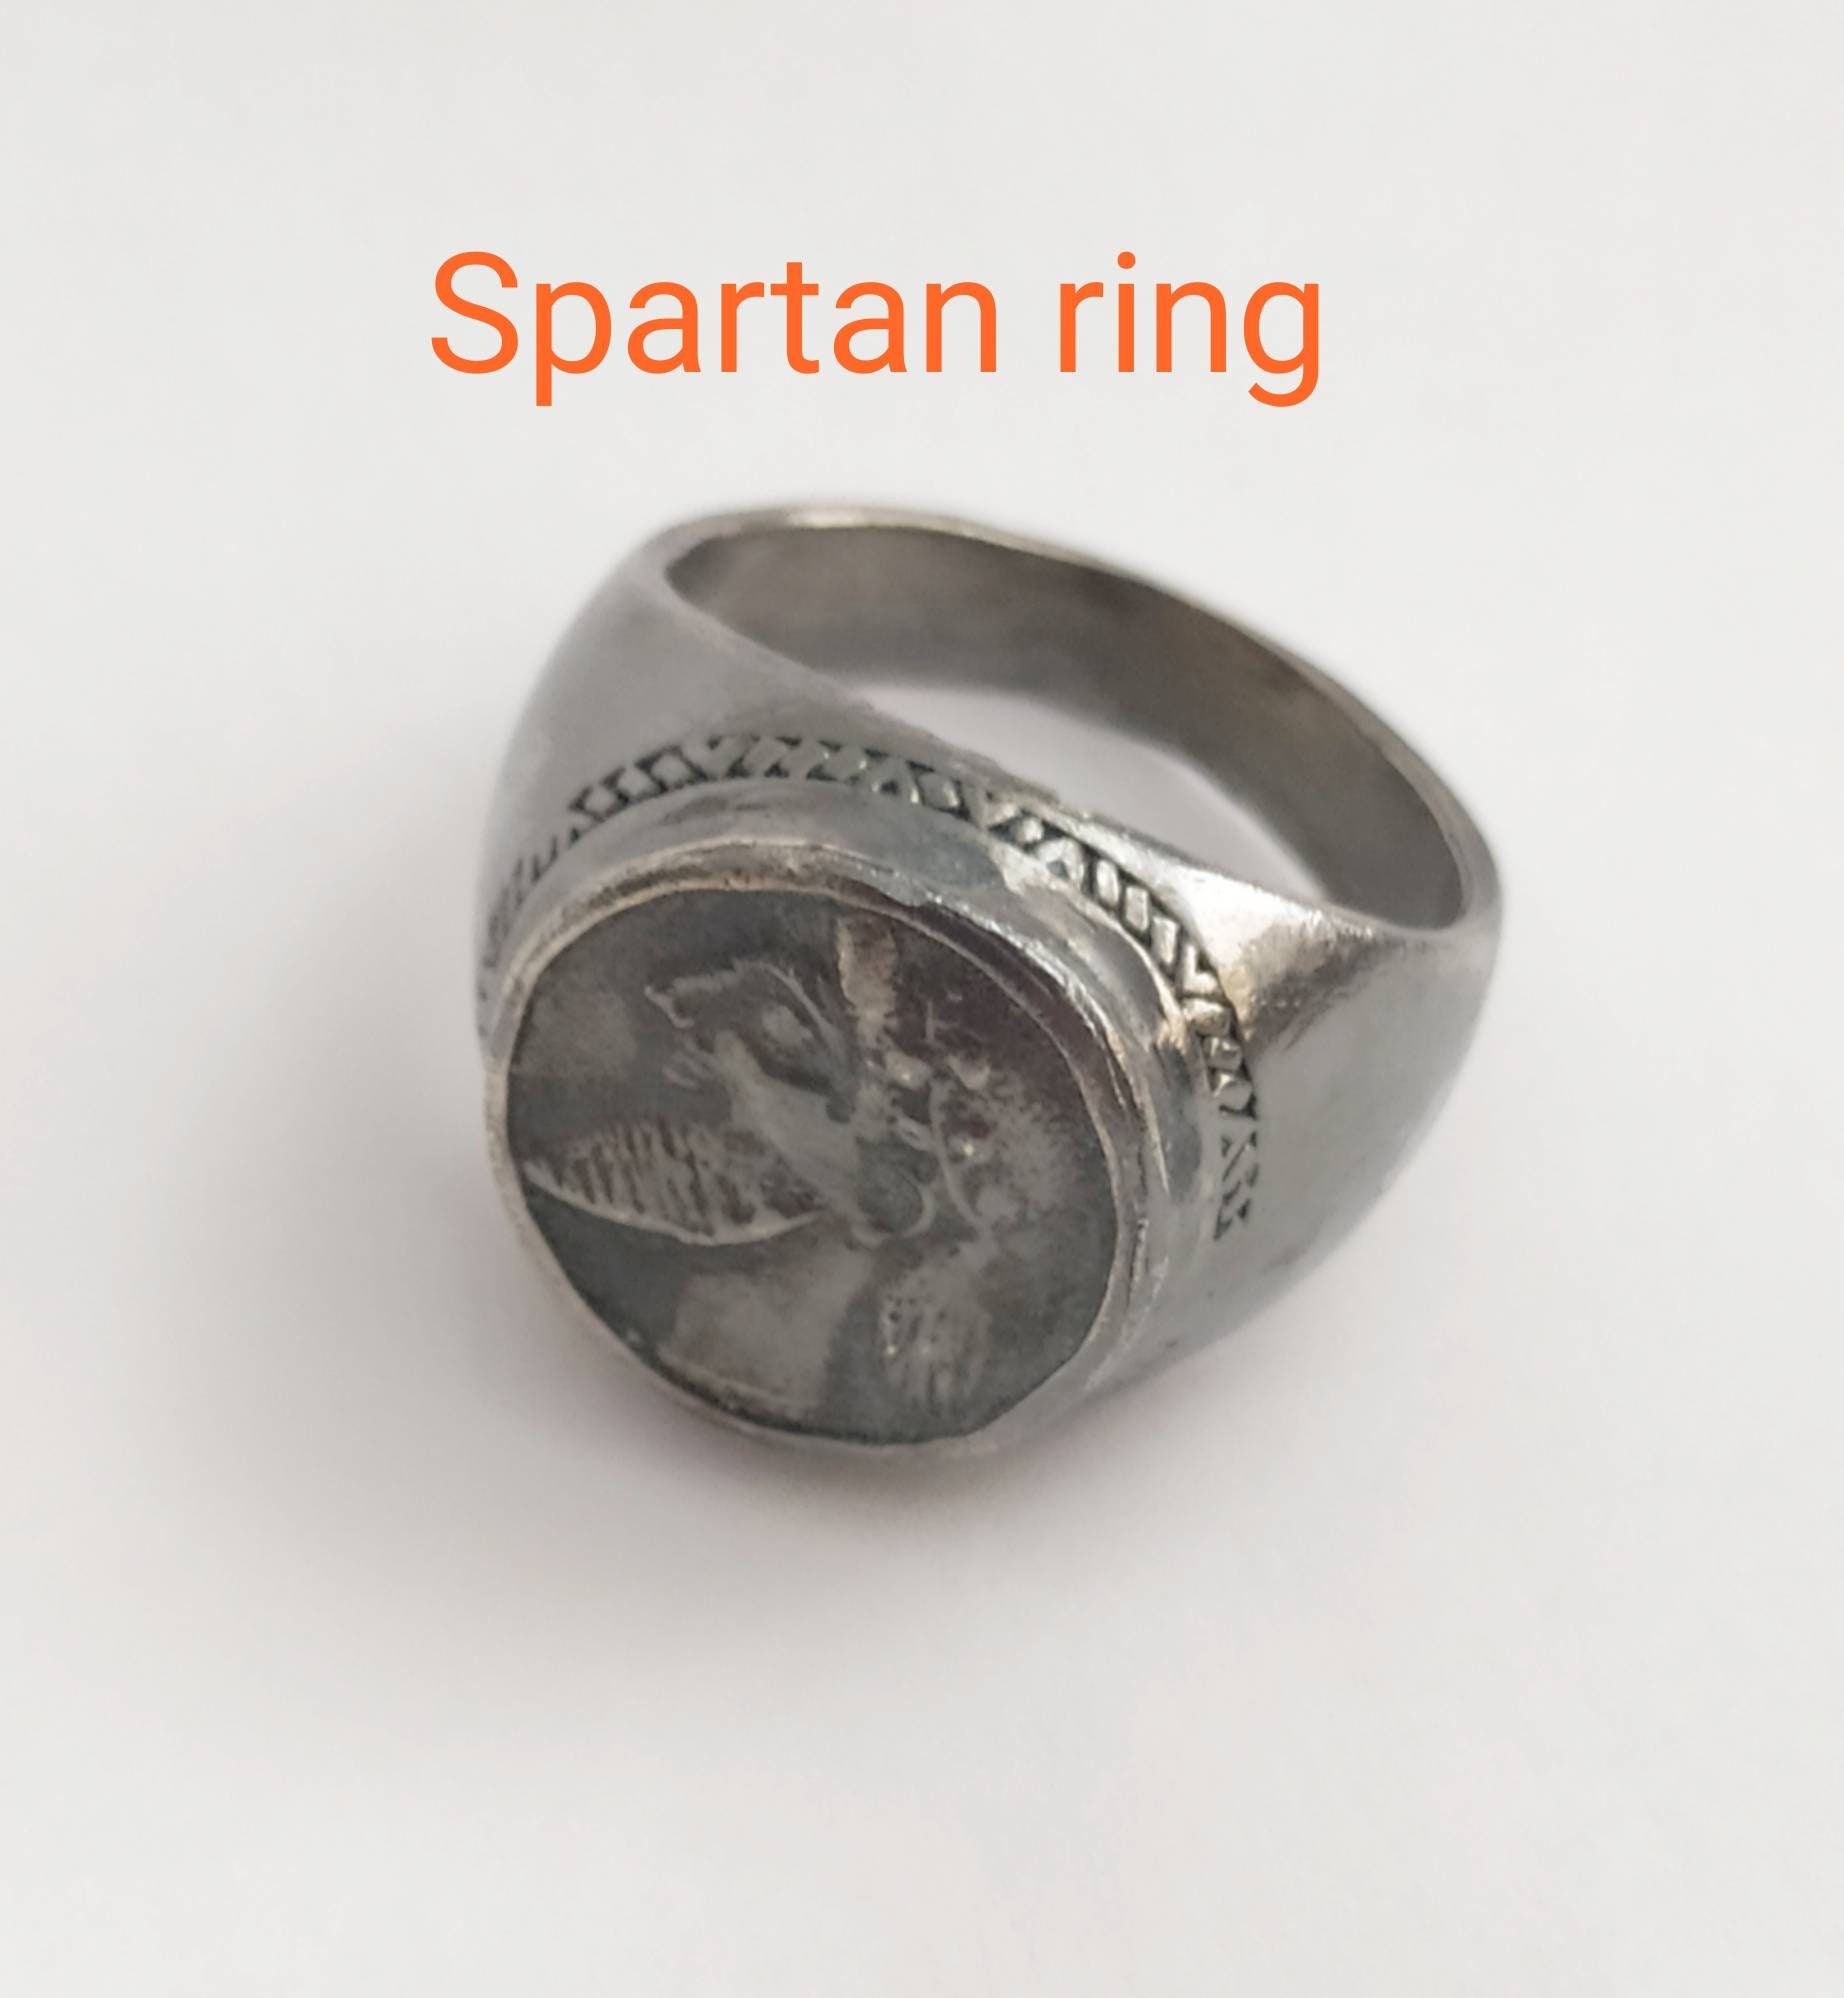 Sparta ergonomic sterling silver glans ring by esculpta